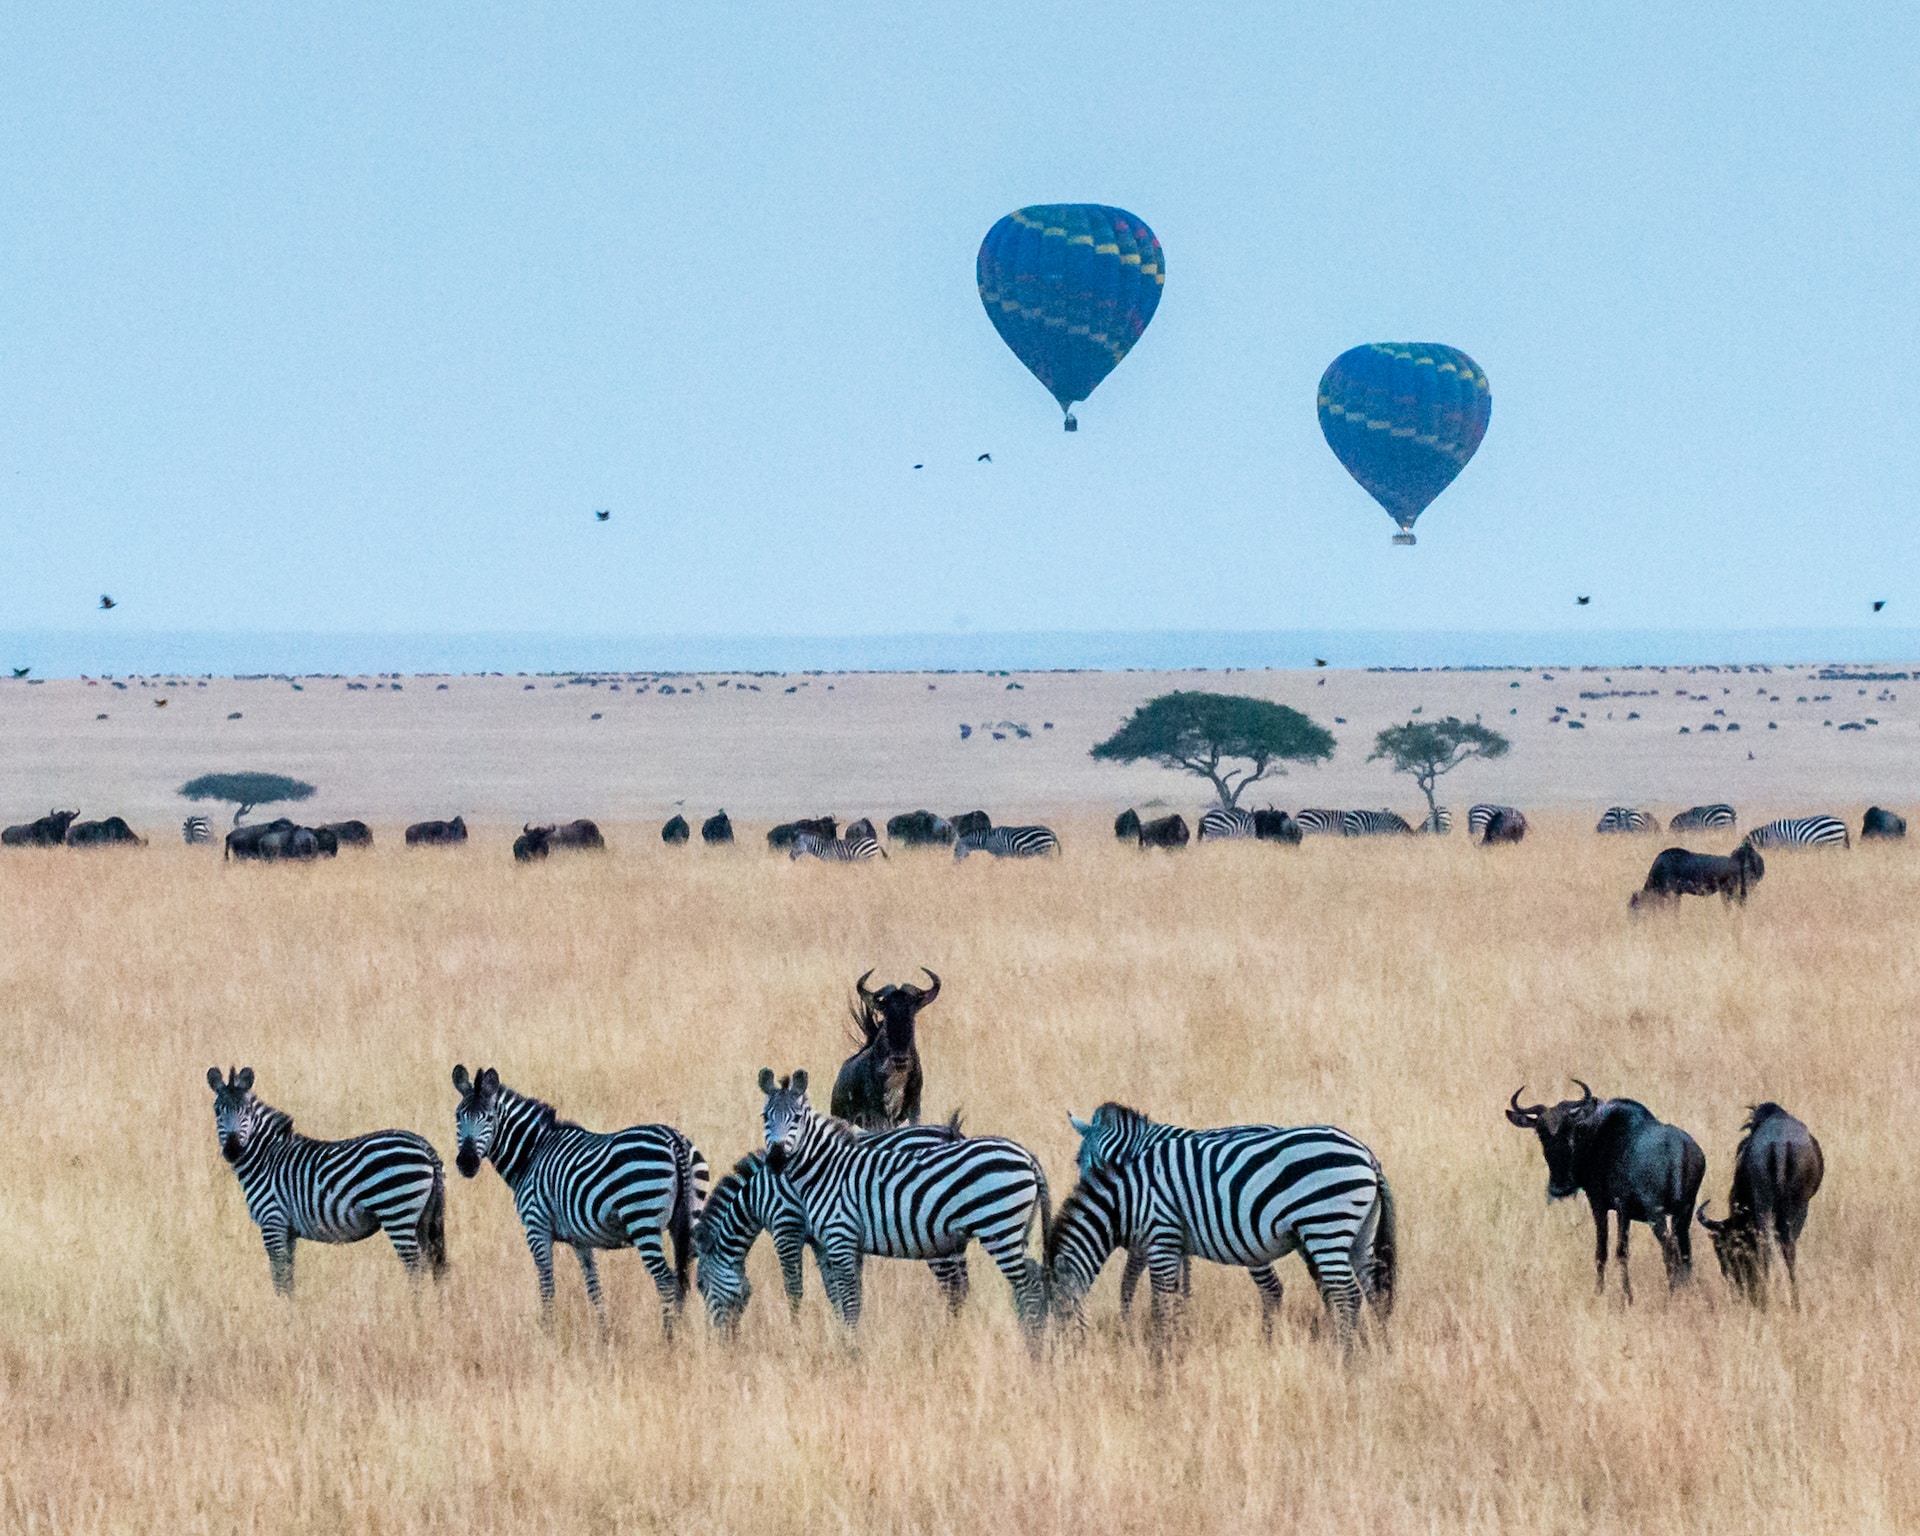 An African safari over maasai Mara zebra and wildebeests